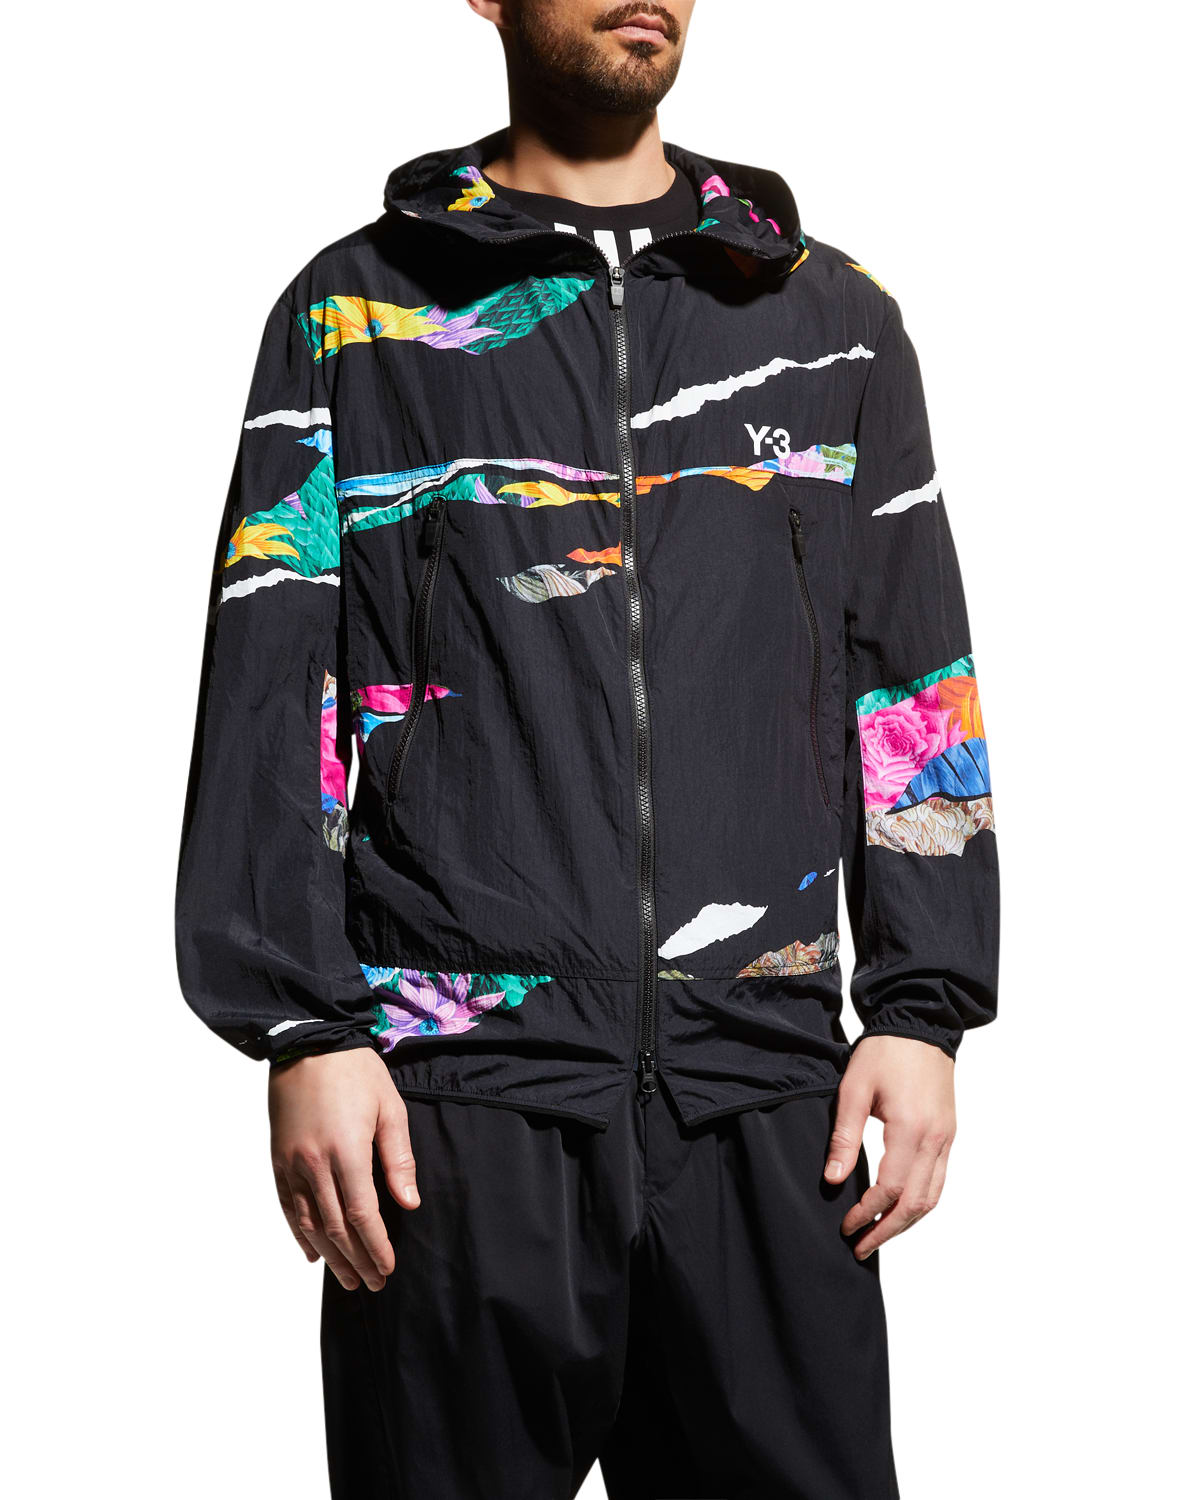 Y-3 Men's Graphic Hooded Wind-Resistant Jacket